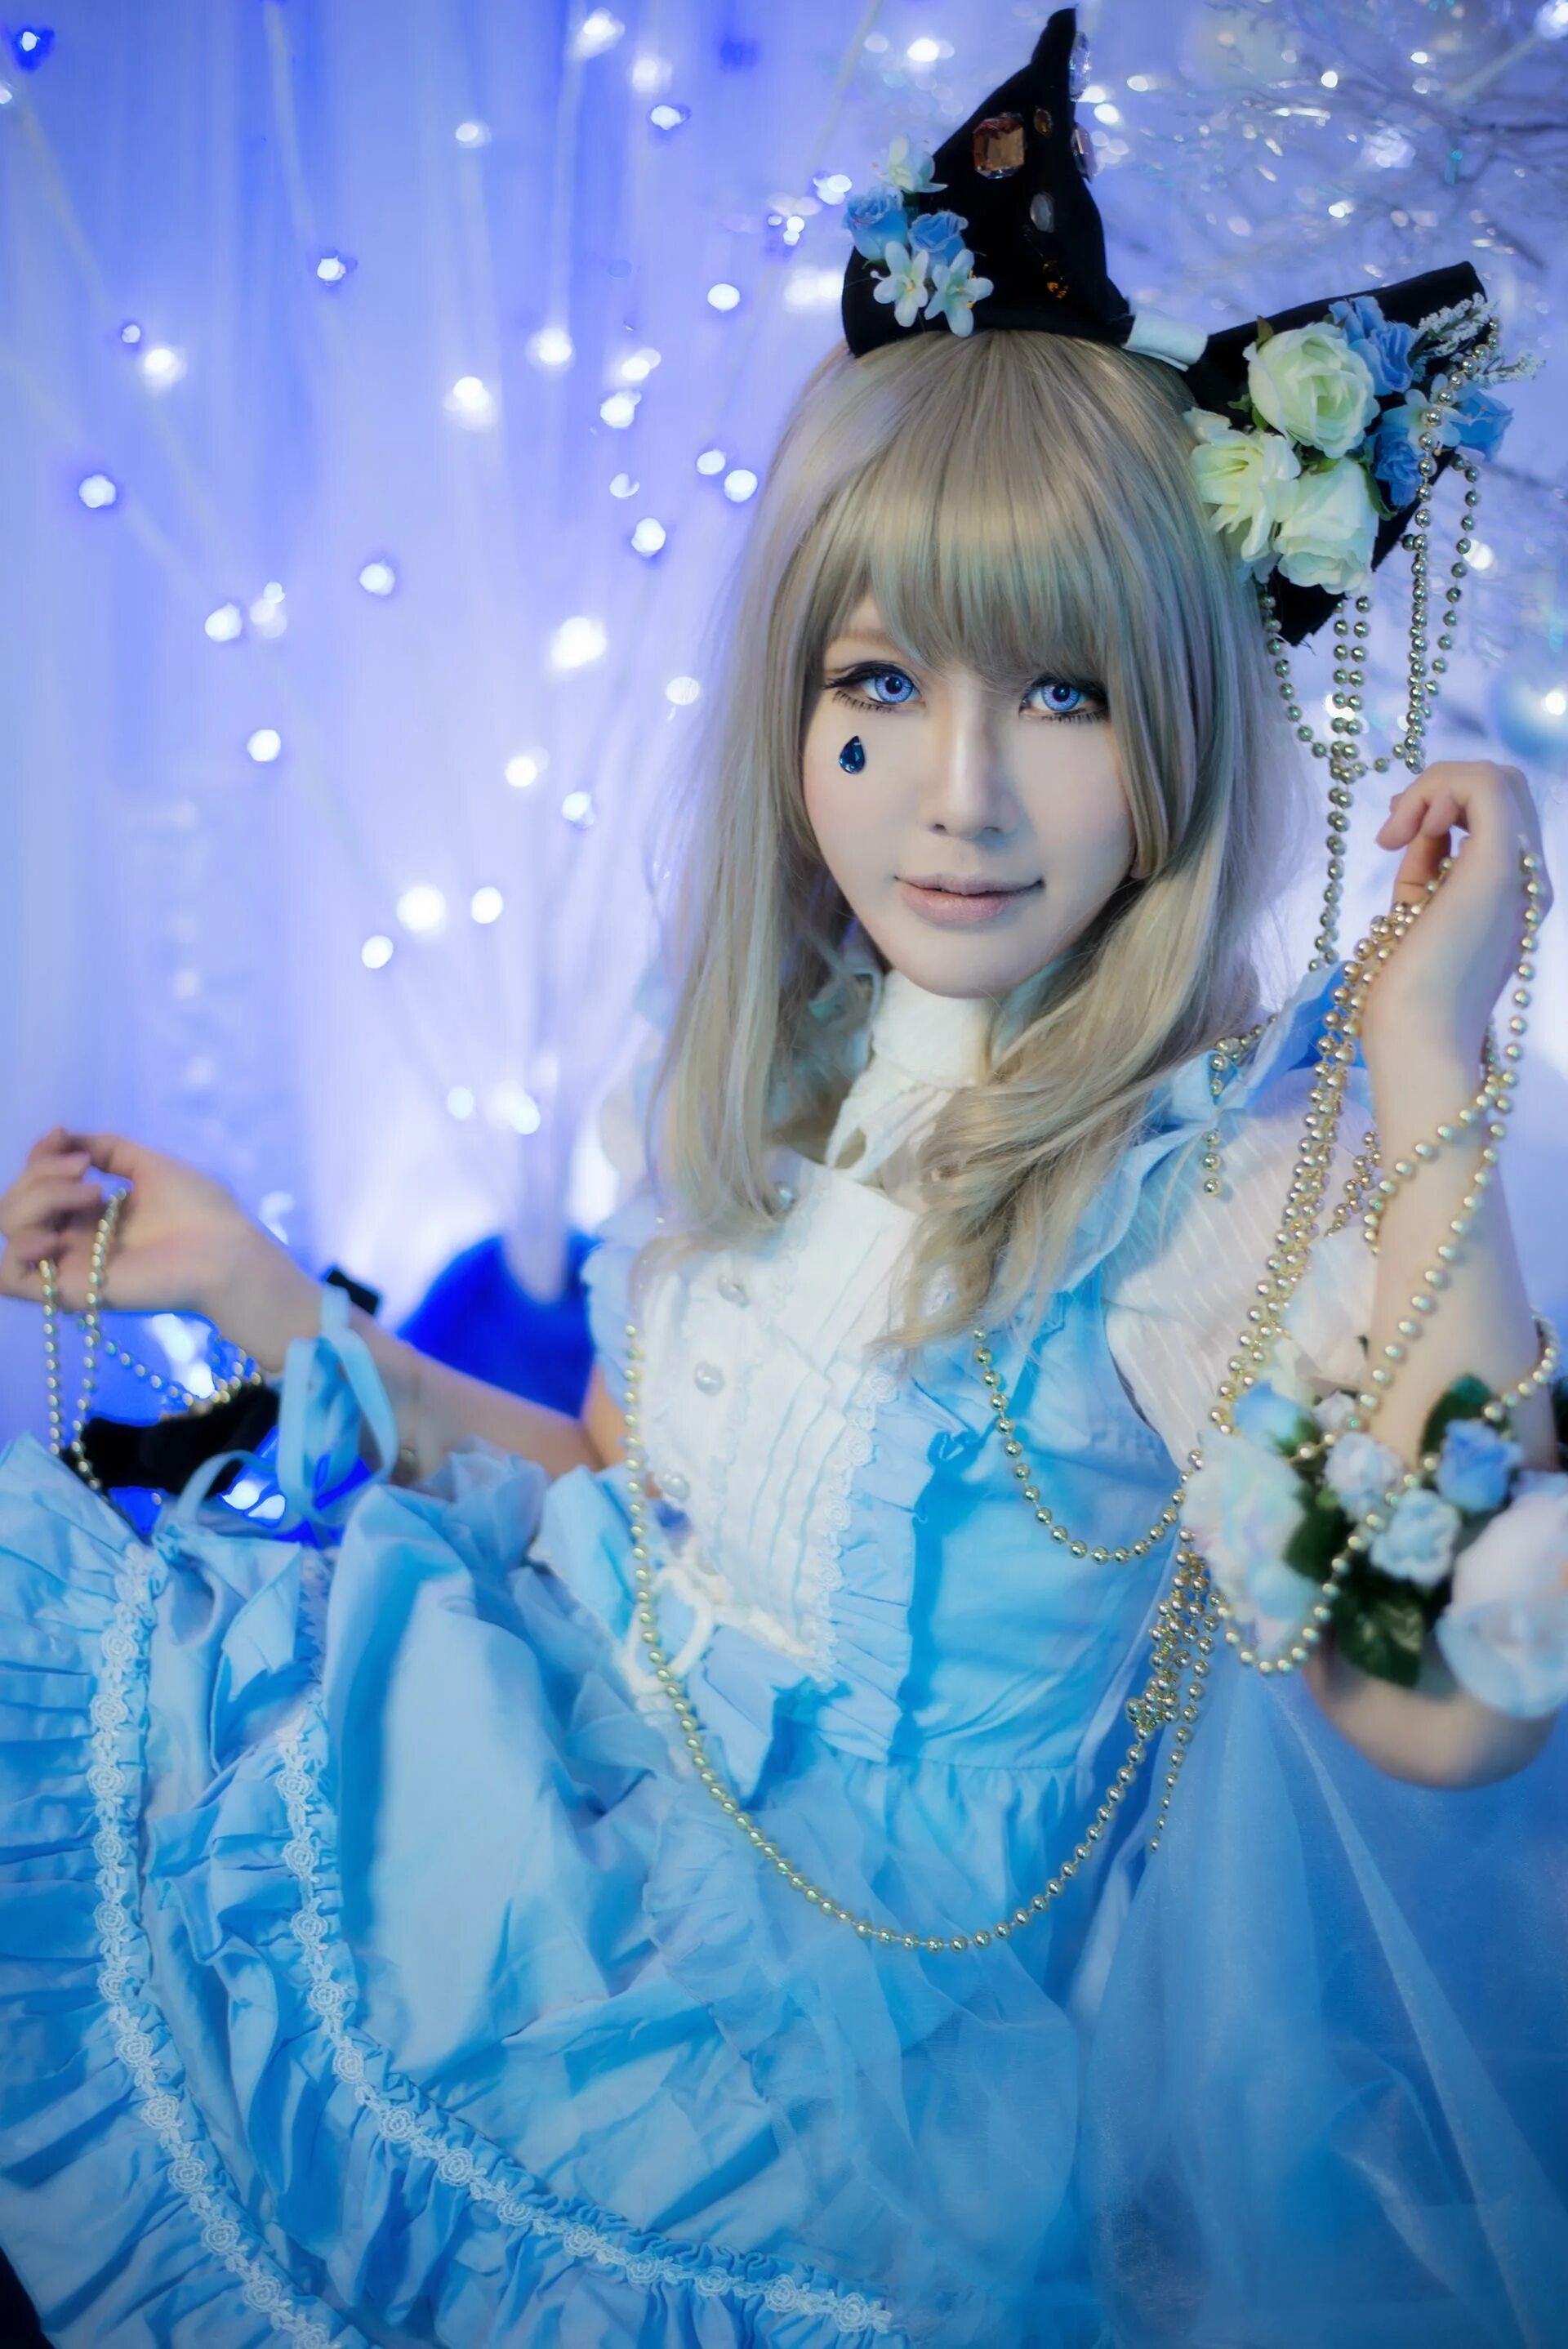 Алиса можно покрасивее. Алиса Япония. Алиса на японском. Алиса прекрасная. Девочка Алиса в Японии.